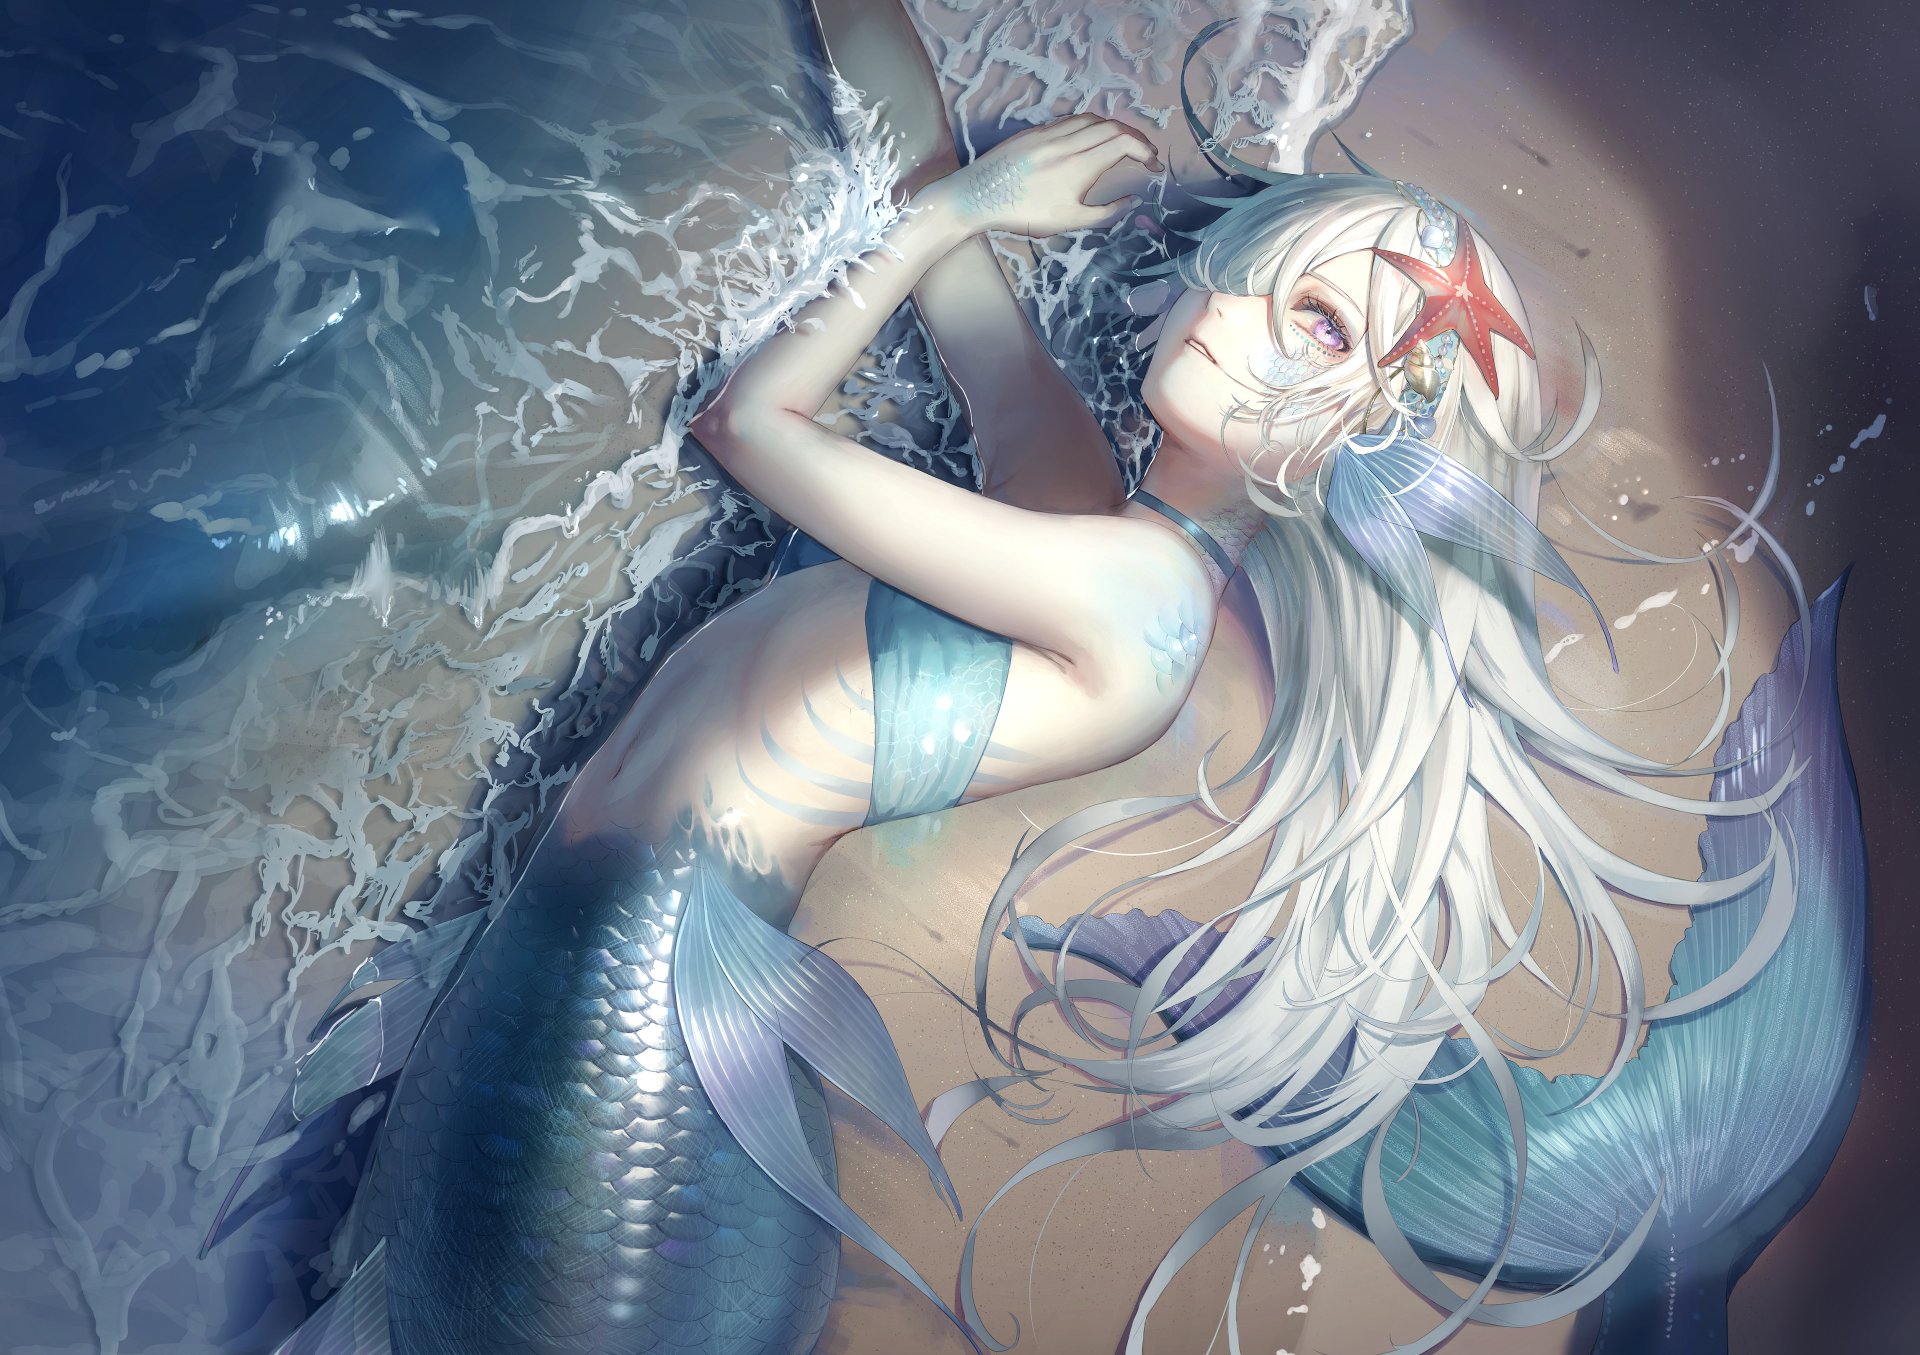 Anime mermaid by xnitarax on DeviantArt